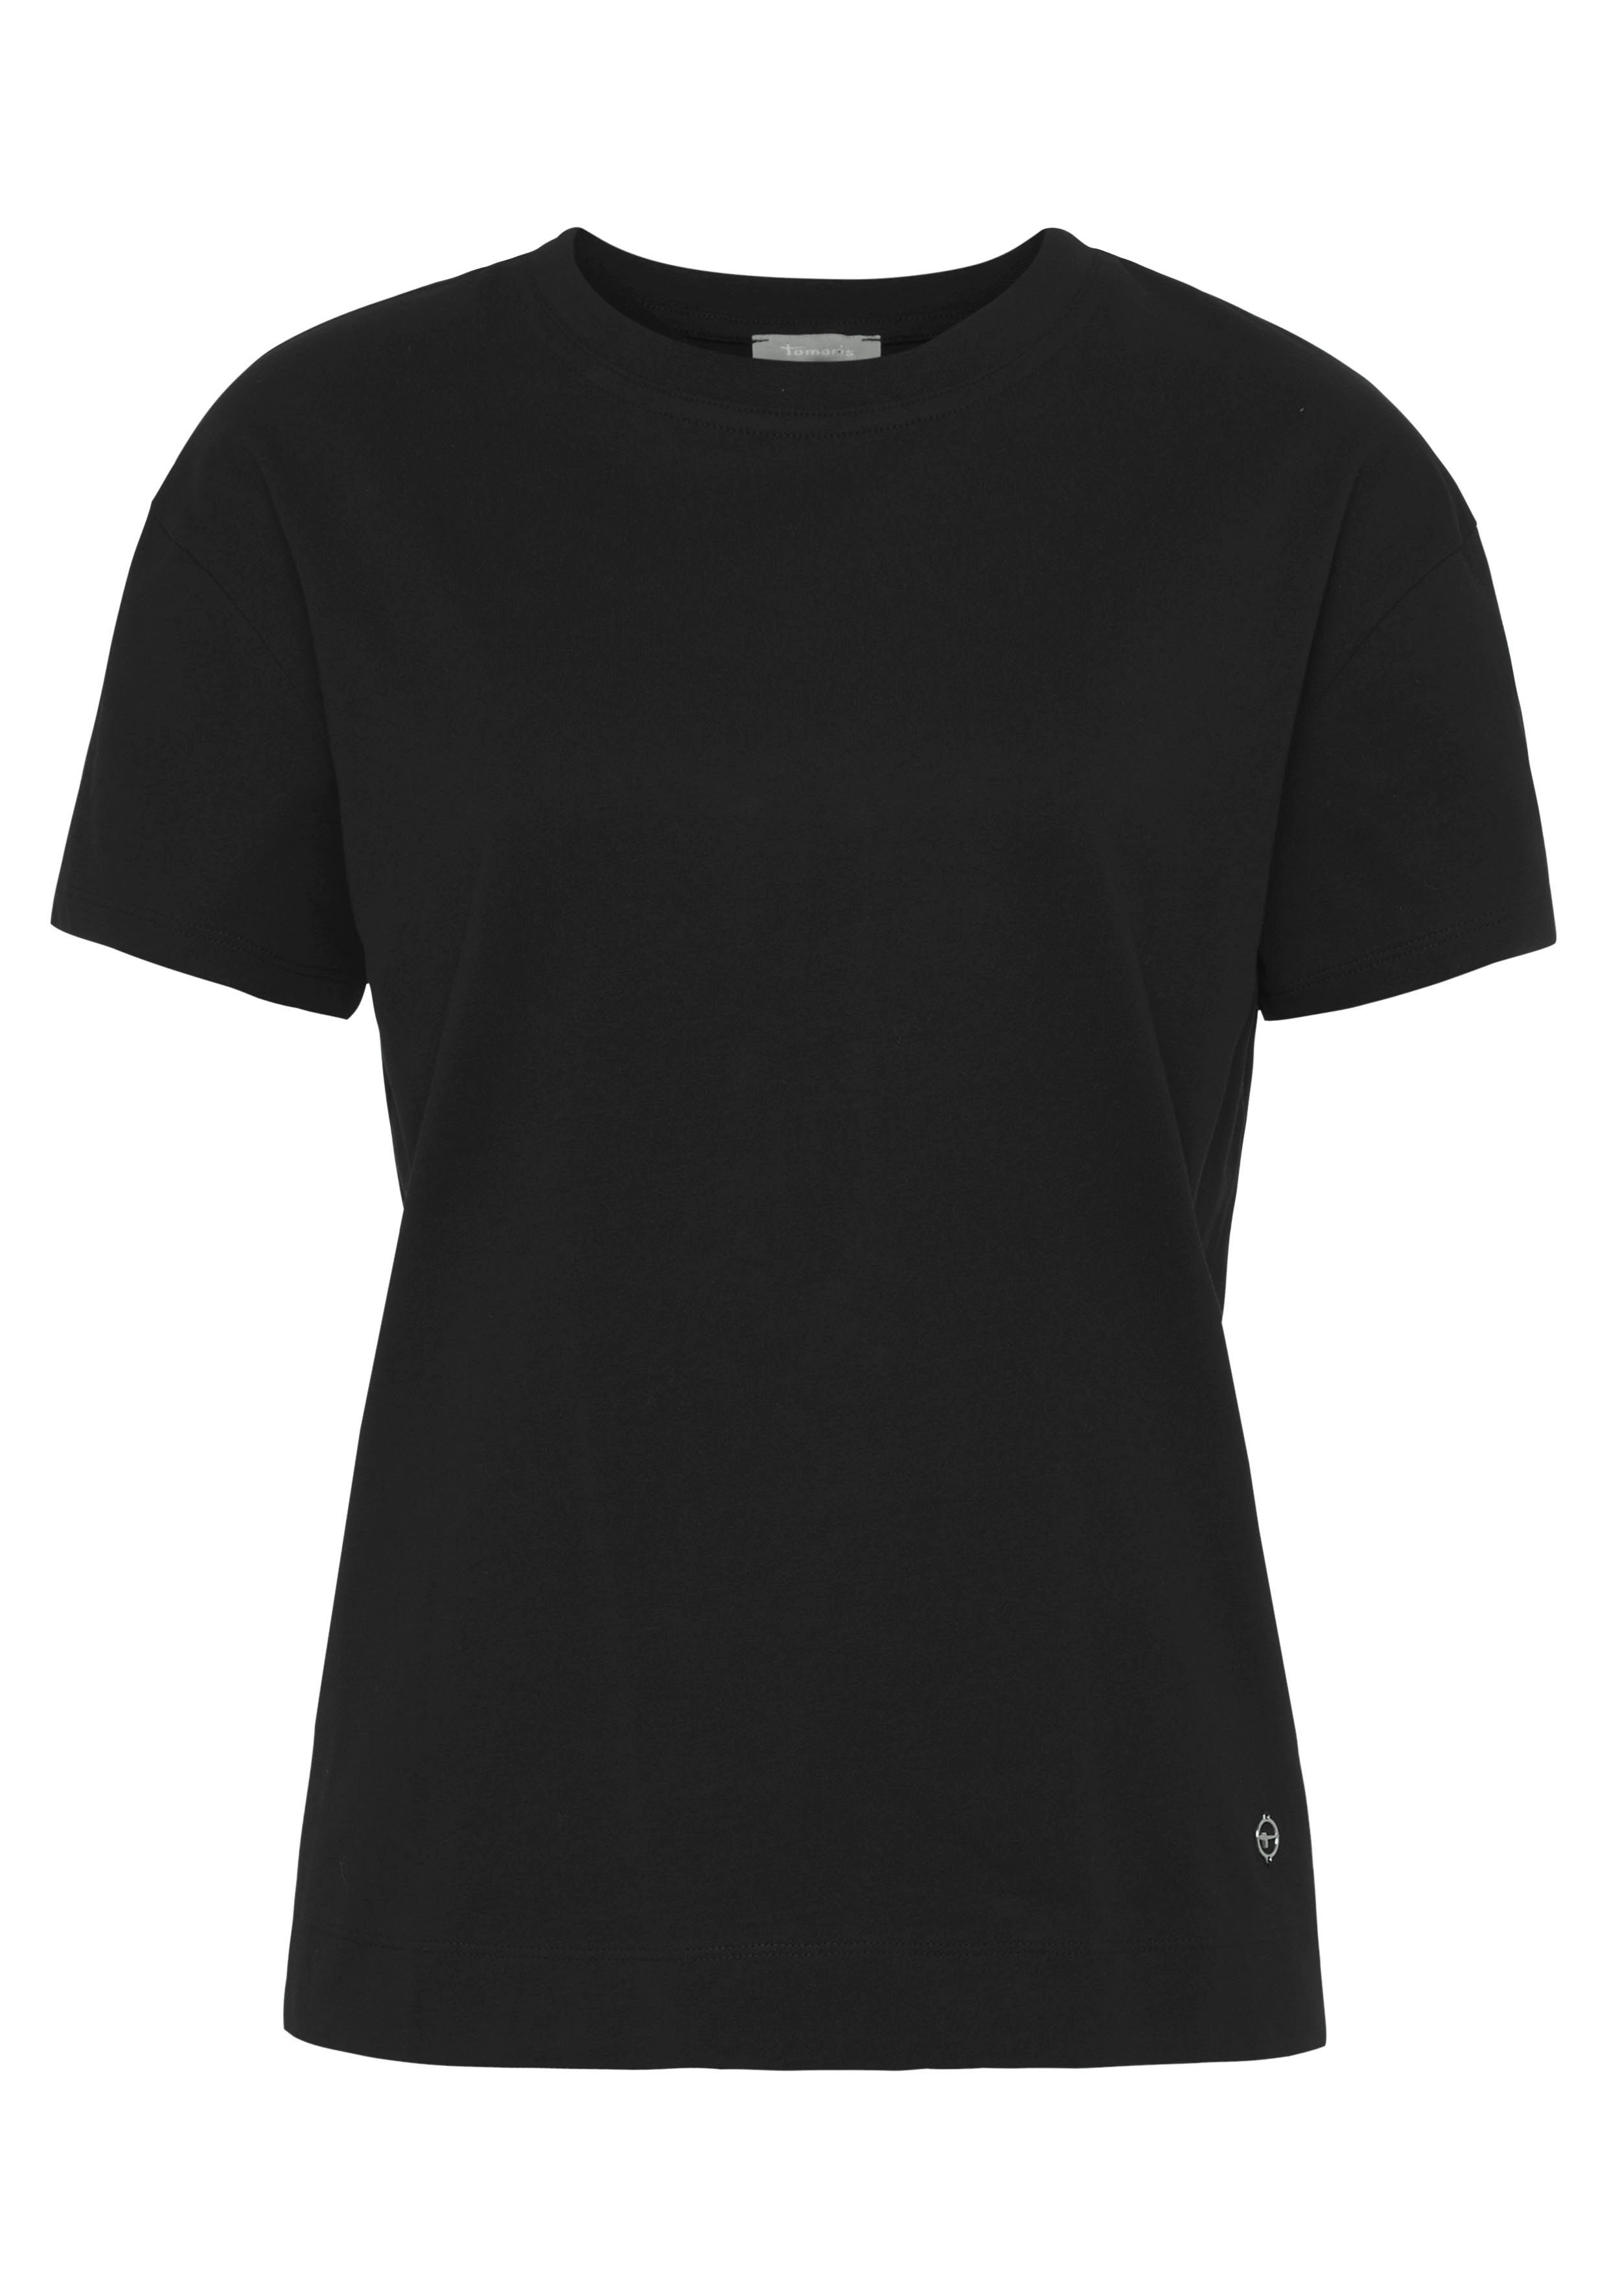 Tamaris im schwarz T-Shirt Oversized-Look